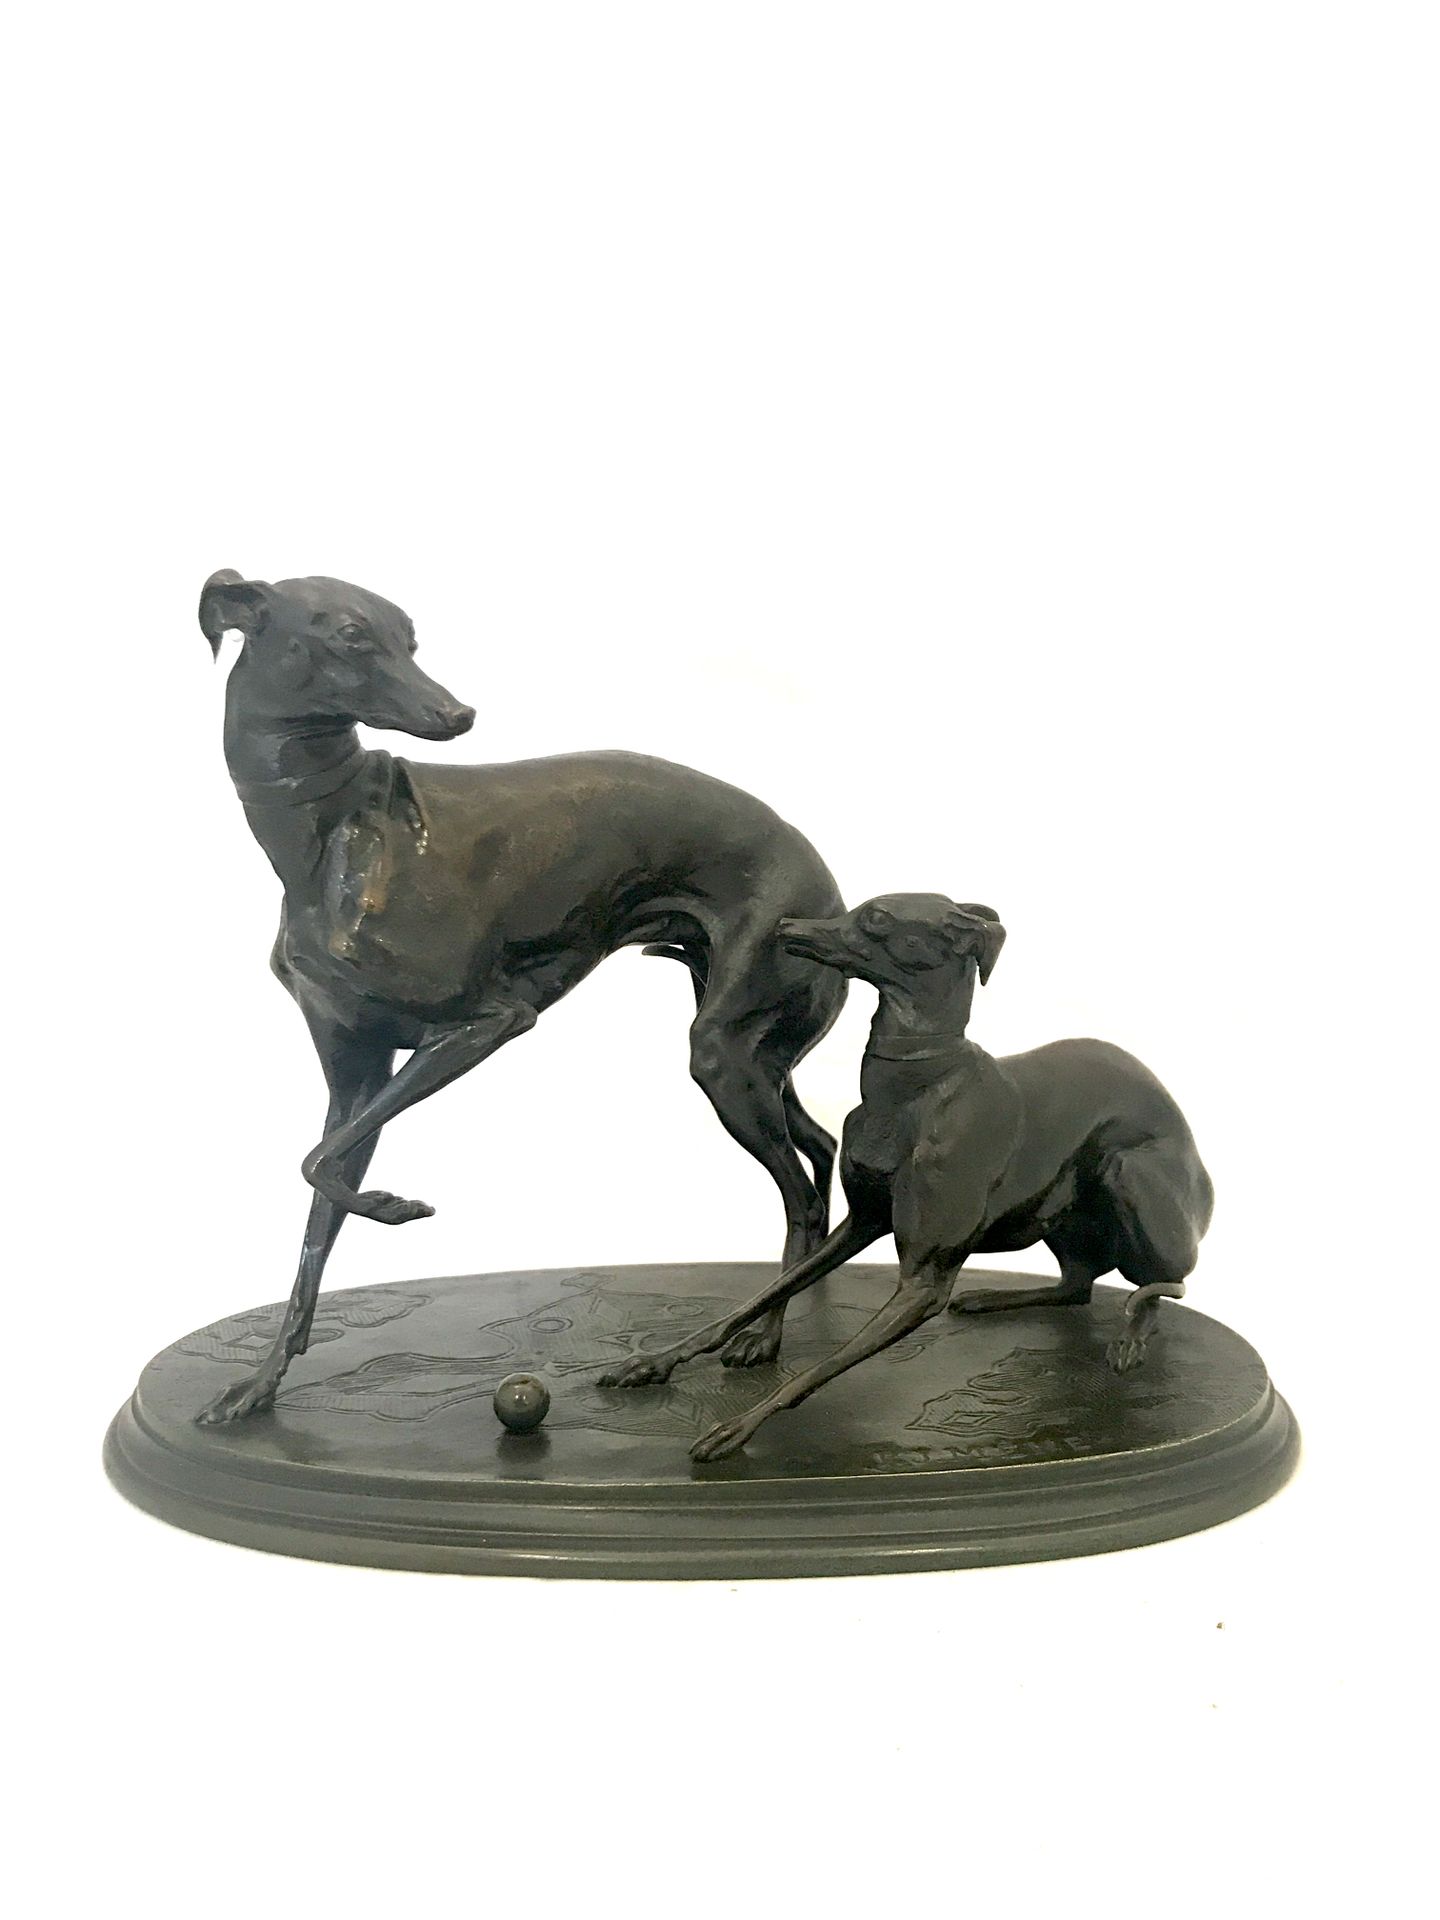 Null MENE Pierre-Jules 1810-1879, after

灰狗和惠比特犬。

"灰狗和惠比特犬

青铜色，带有深色的铜锈。

底座上有签&hellip;